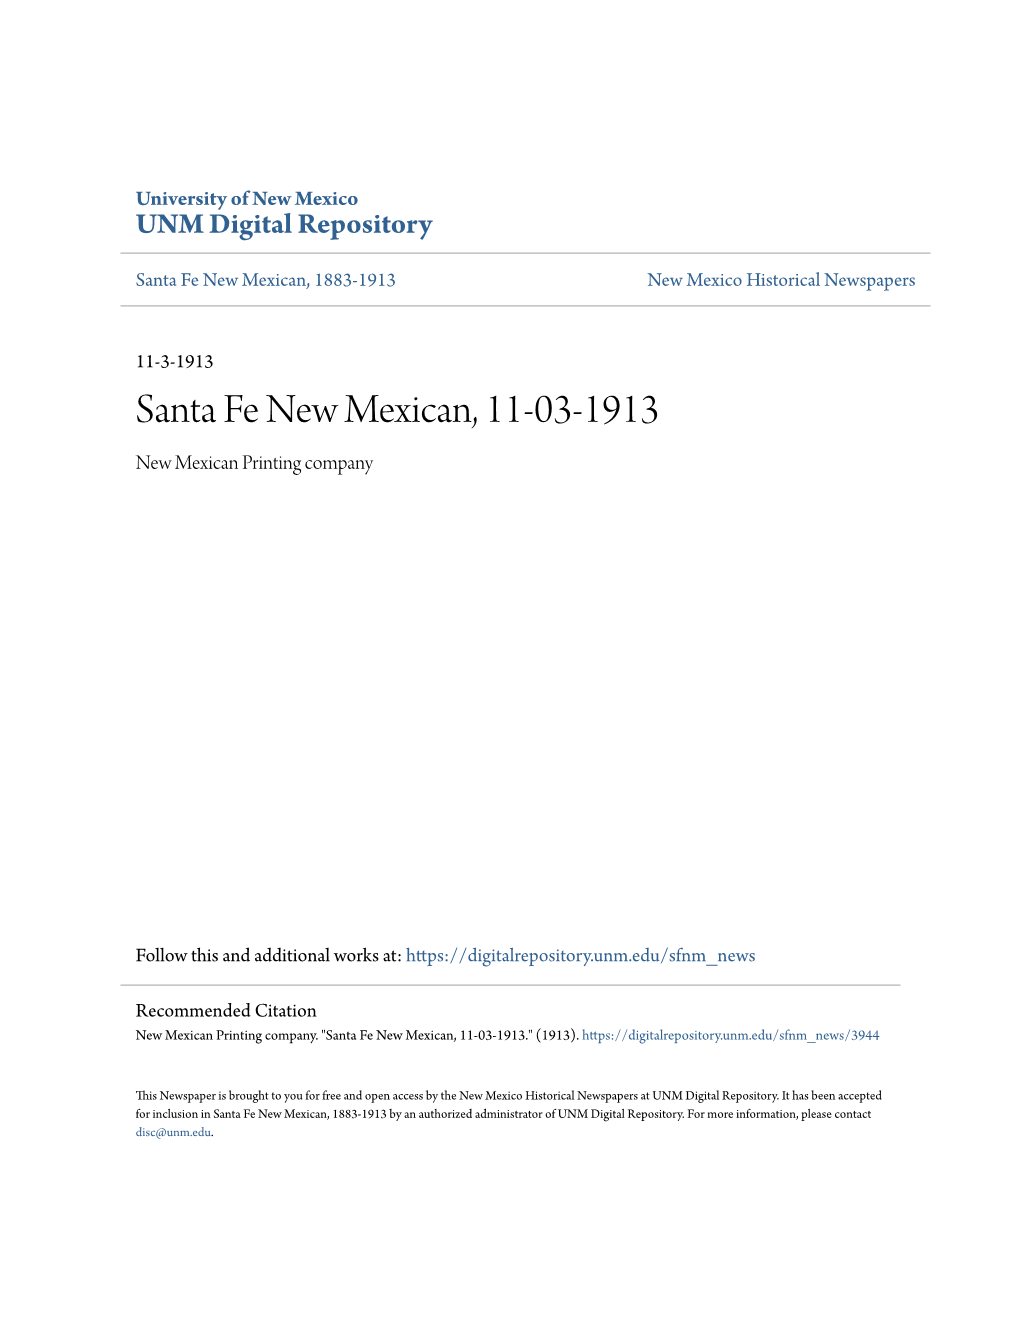 Santa Fe New Mexican, 11-03-1913 New Mexican Printing Company